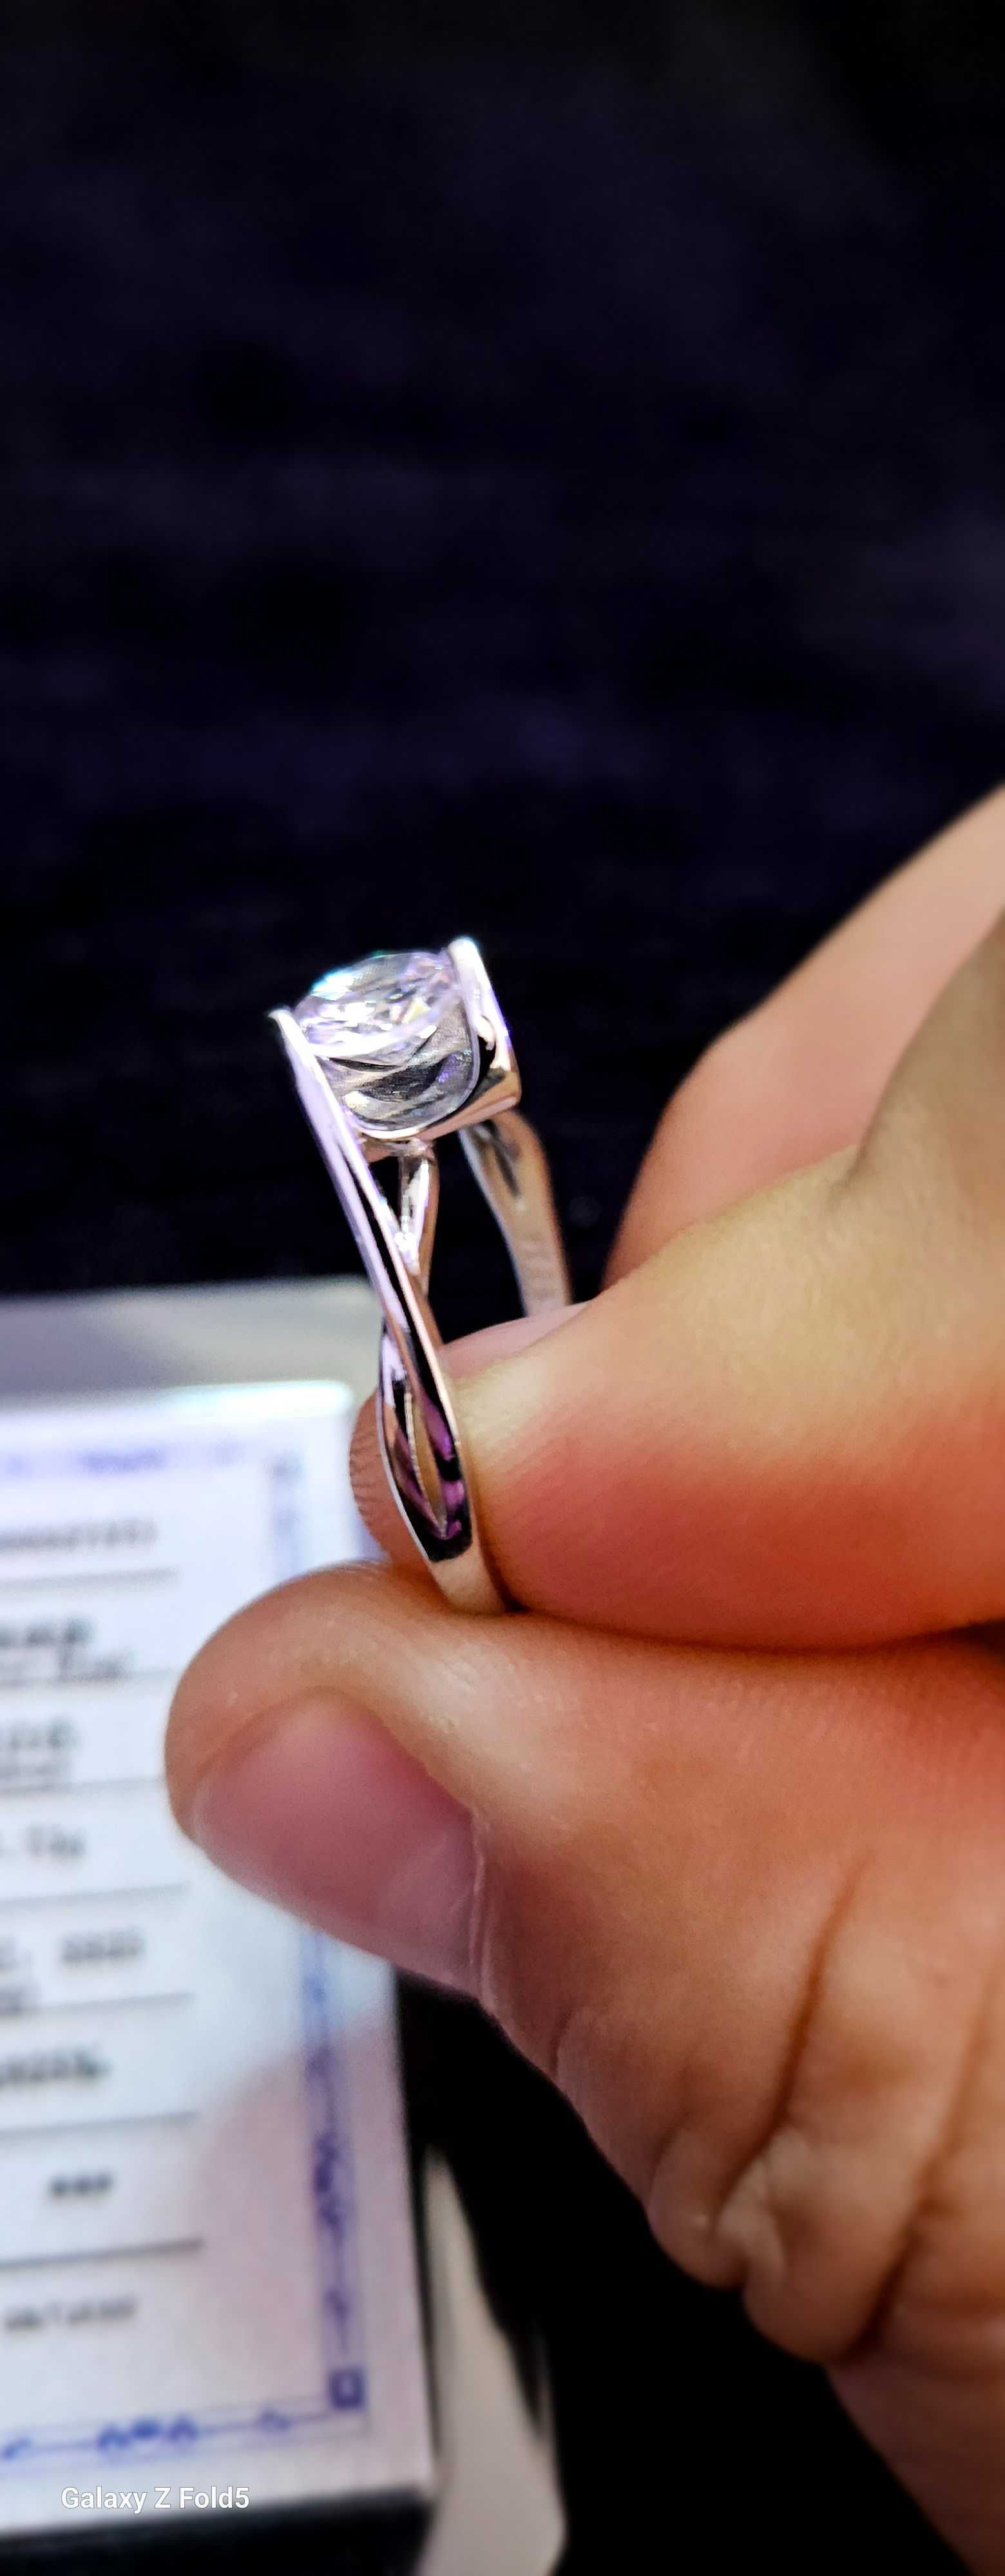 Piekny srebrny pierścionek 2,73 g próba S925  rozm.10 certyfikat